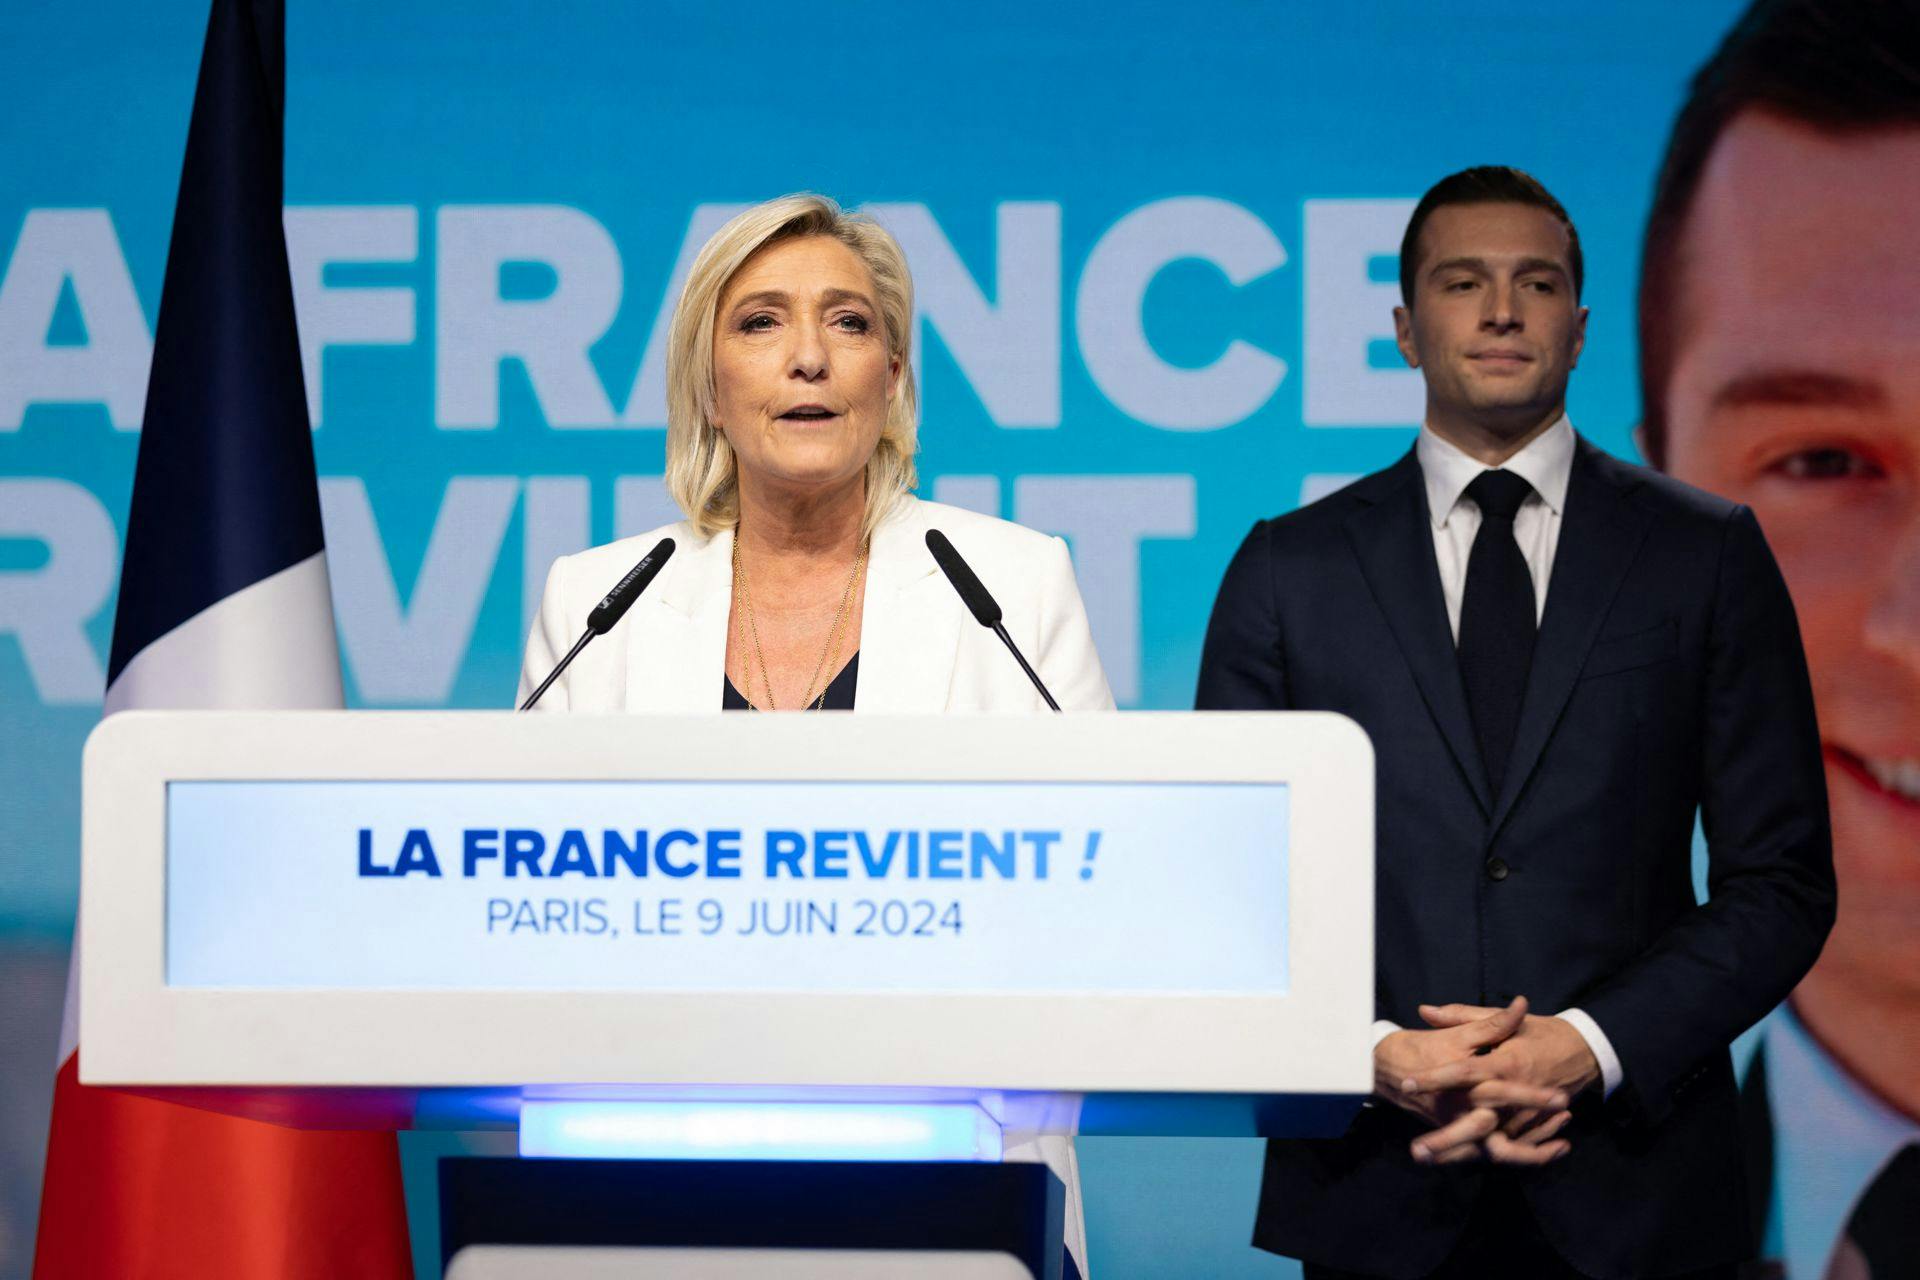 Macron Dissolves National Assembly Following Landslide Le Pen Victory